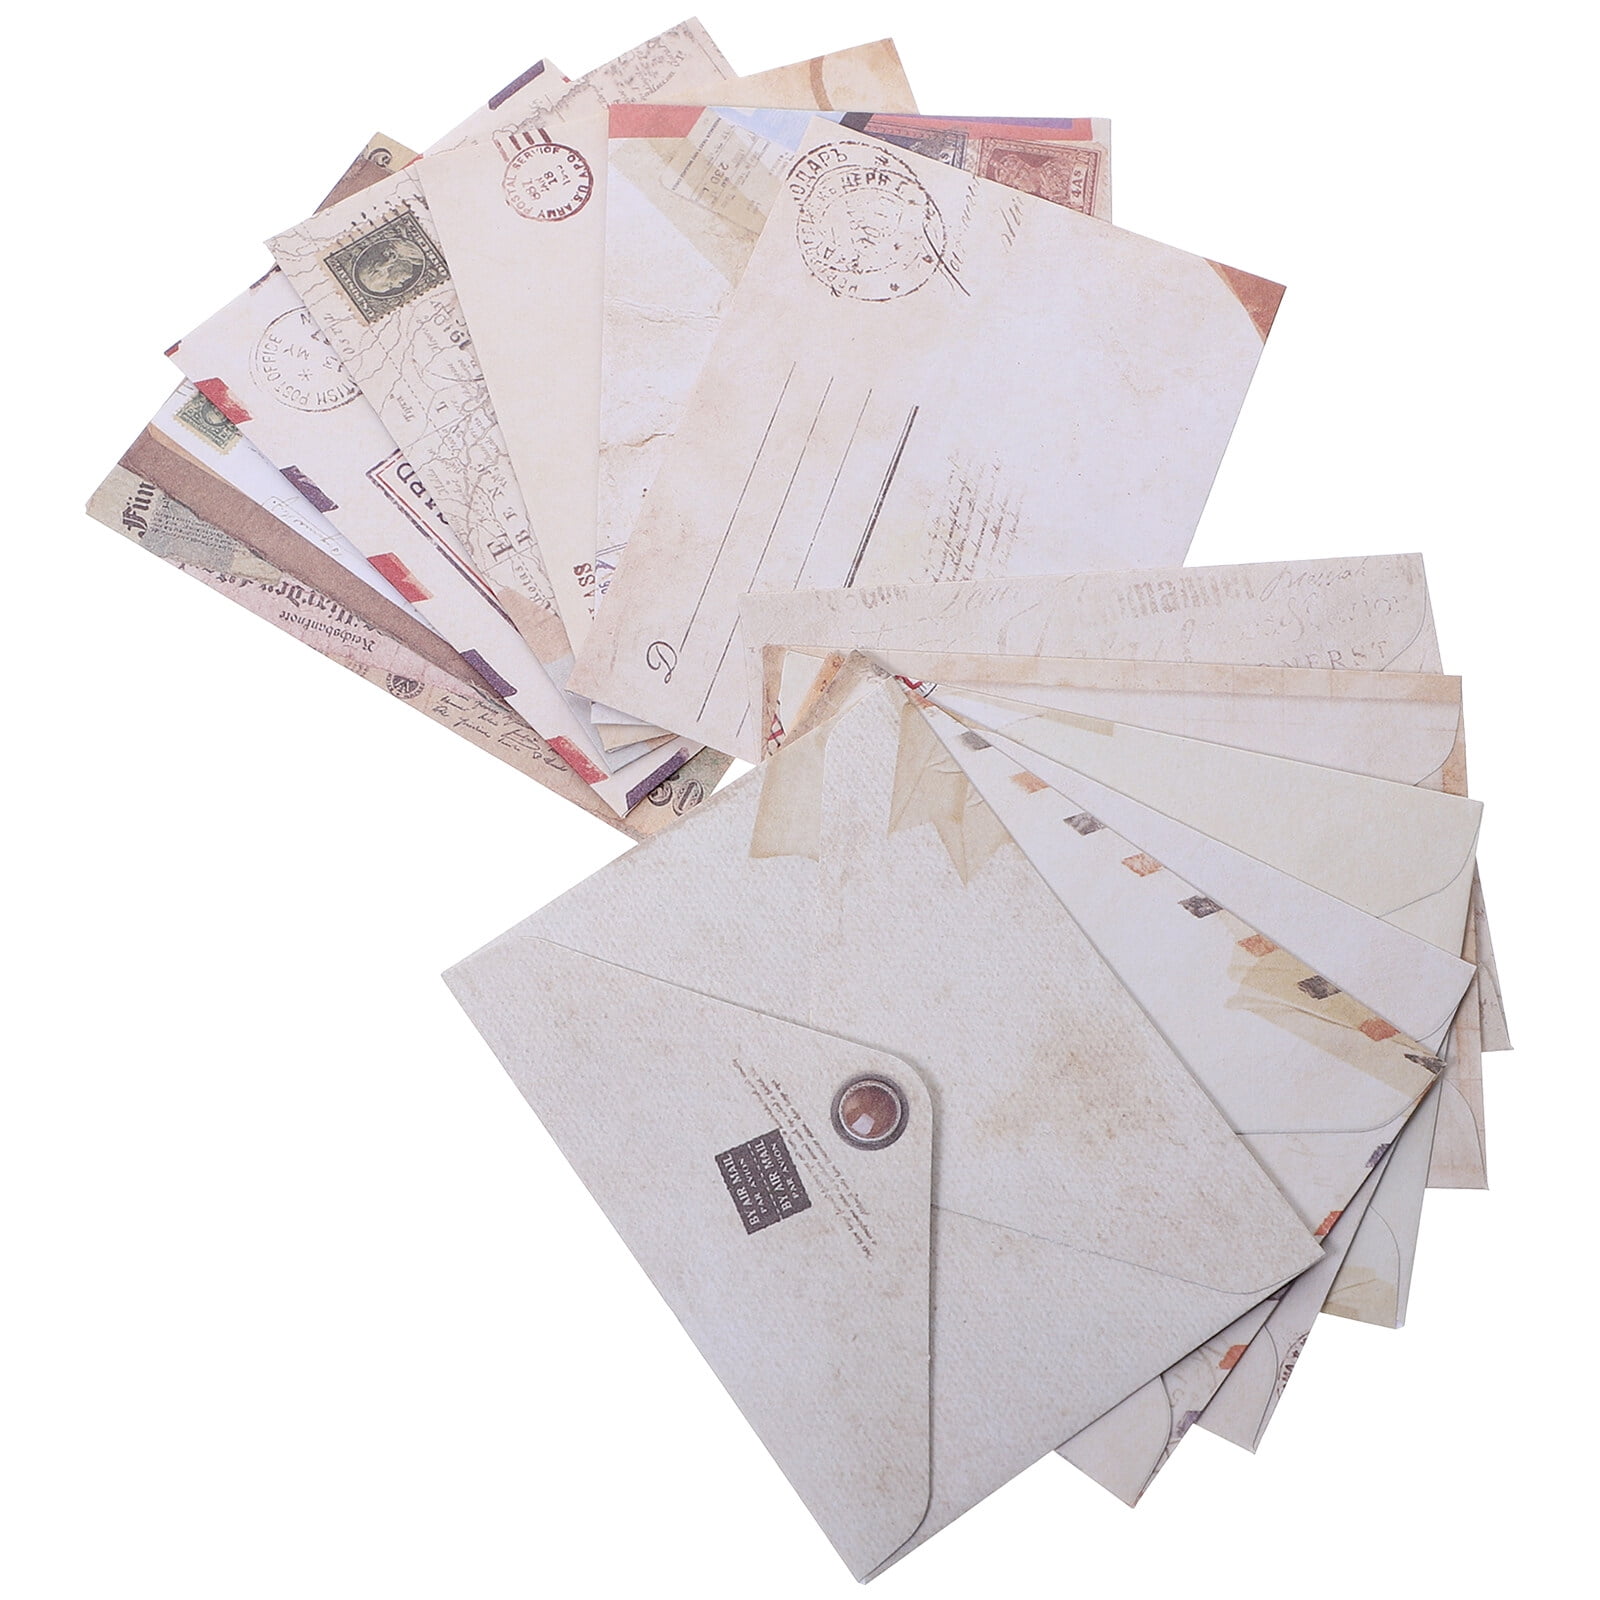 Transparent 5x7 Vellum Envelopes for Invitations, Thank You Notes